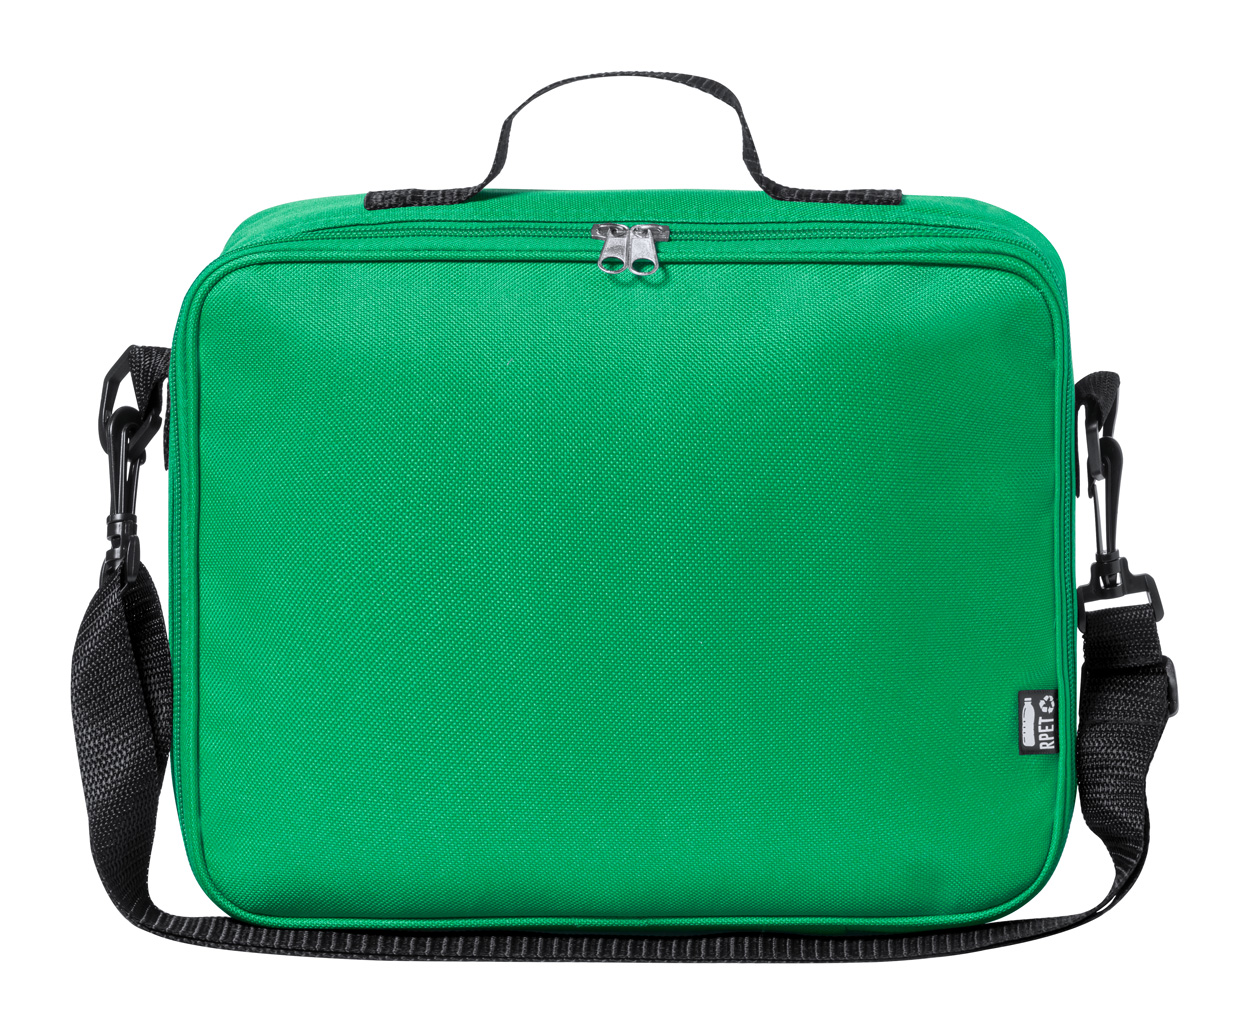 Aitanax cooler bag - green